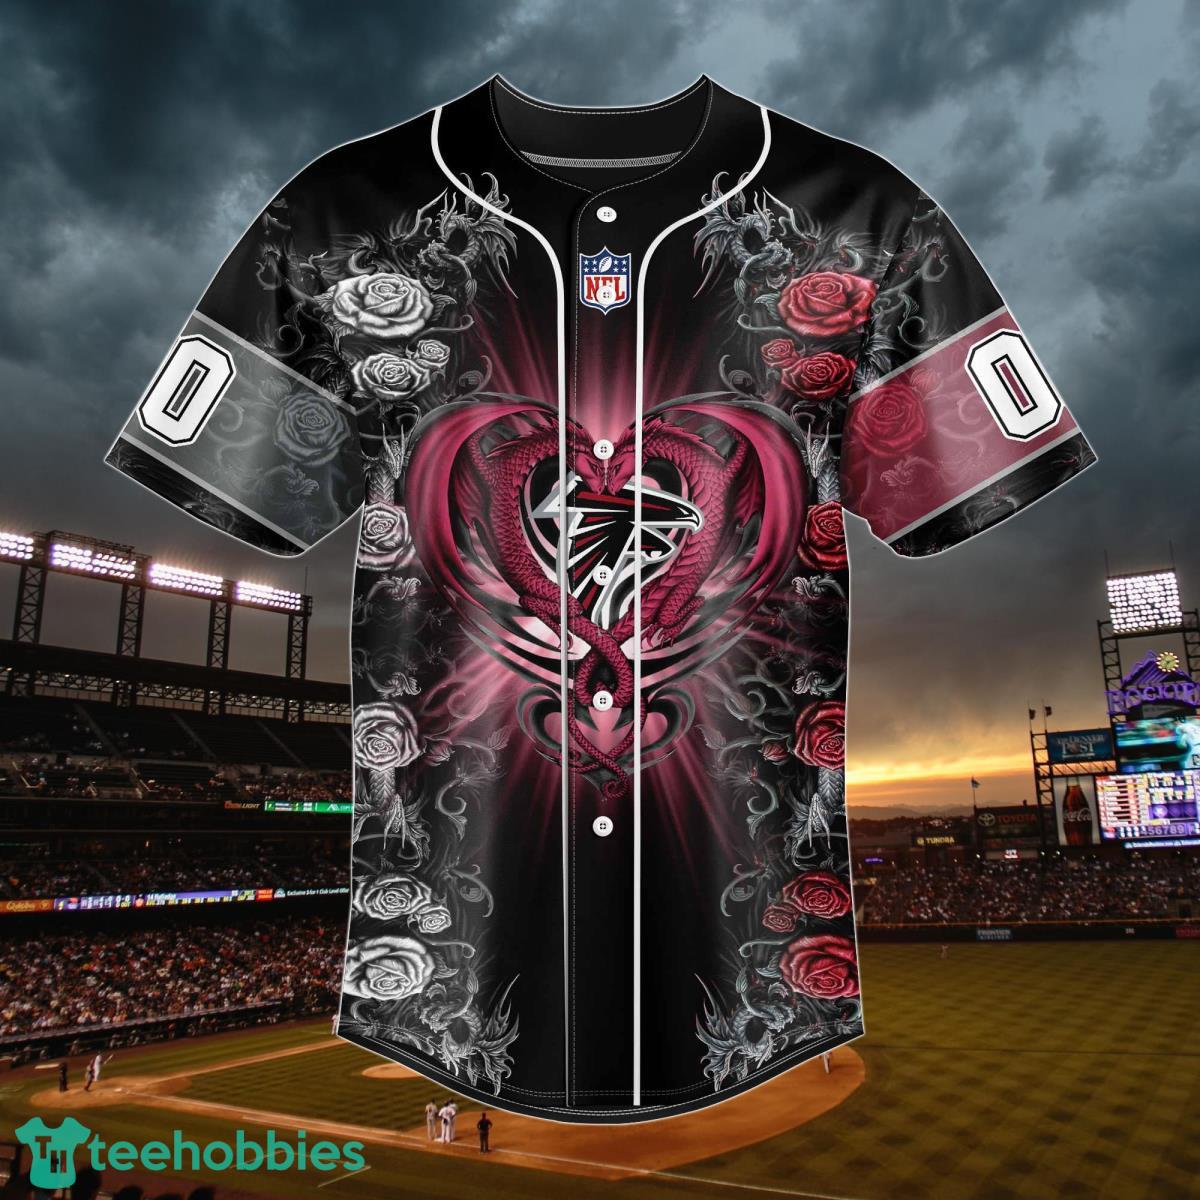 Atlanta Falcons NFL Custom Name And Number Baseball Jersey Shirt -  Freedomdesign